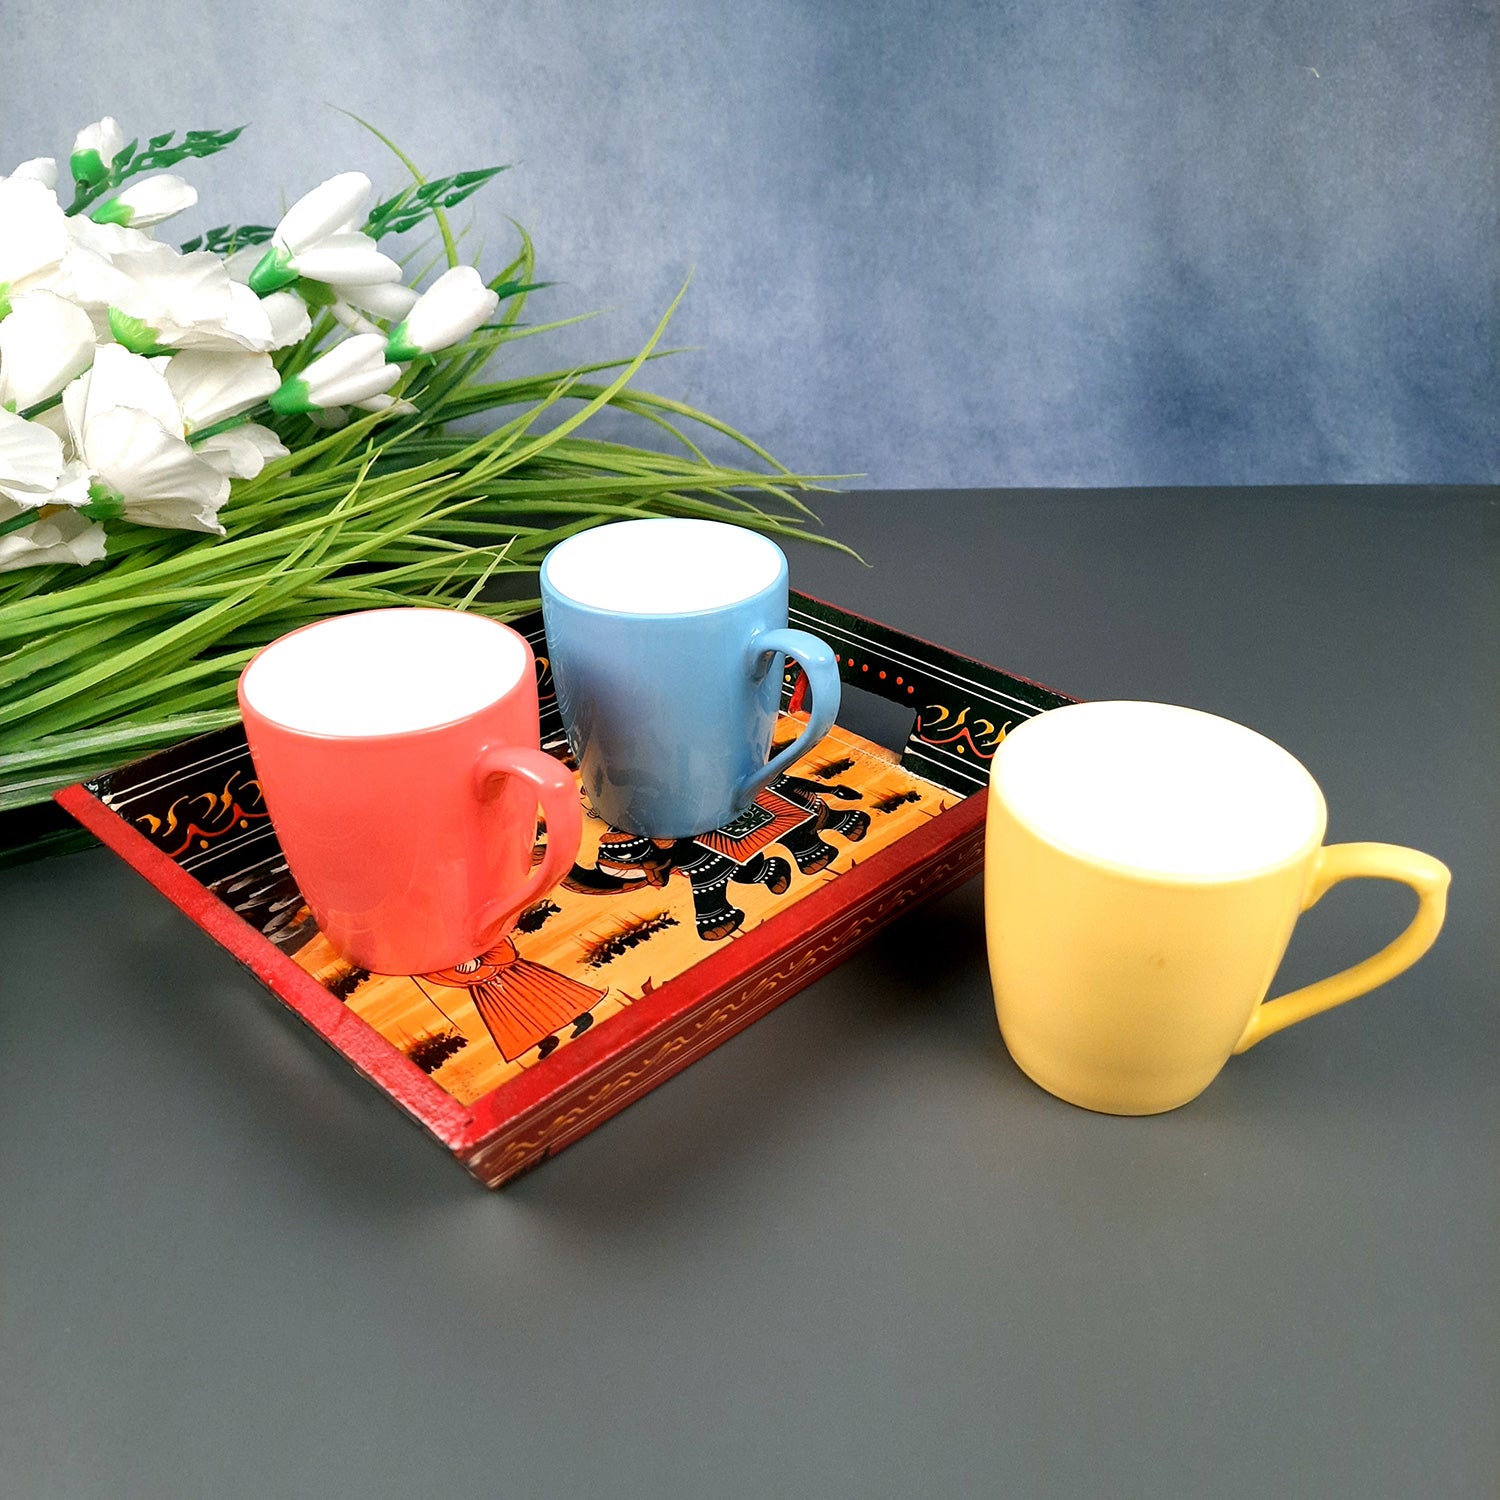 Wooden Serving Tray | Tea & Snacks Serving Platter For Home, Dining Table, Kitchen Decor | Wedding & Housewarming Gift - 10 Inch - Apkamart